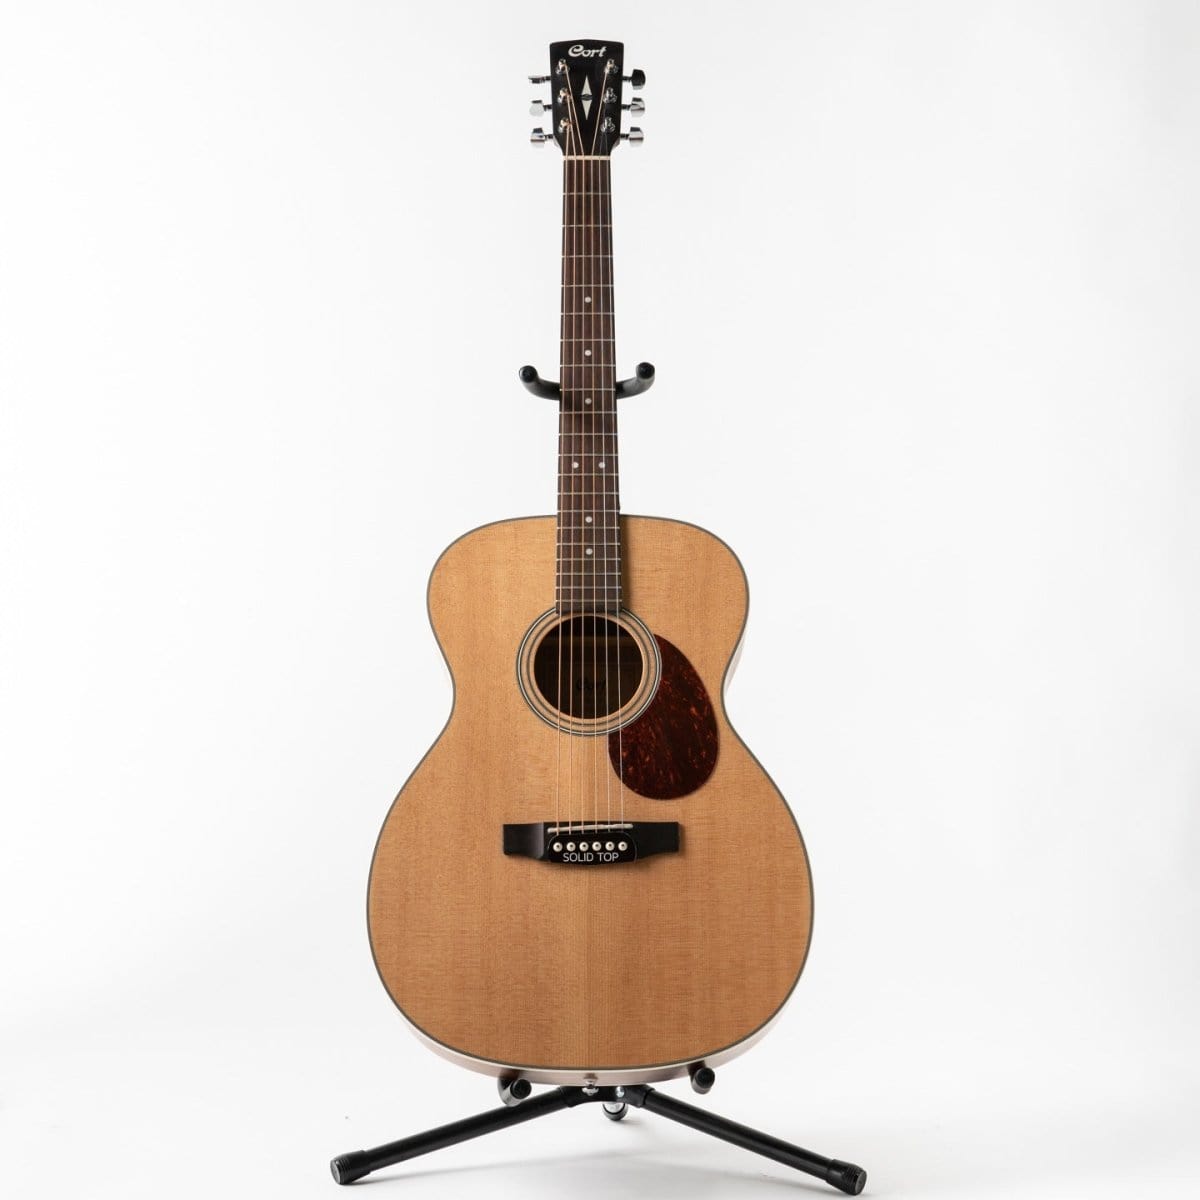 Cort L100-ONS OM Solid Spruce Top Acoustic Guitar Acoustic Guitars Cort - RiverCity Rockstar Academy Music Store, Salem Keizer Oregon